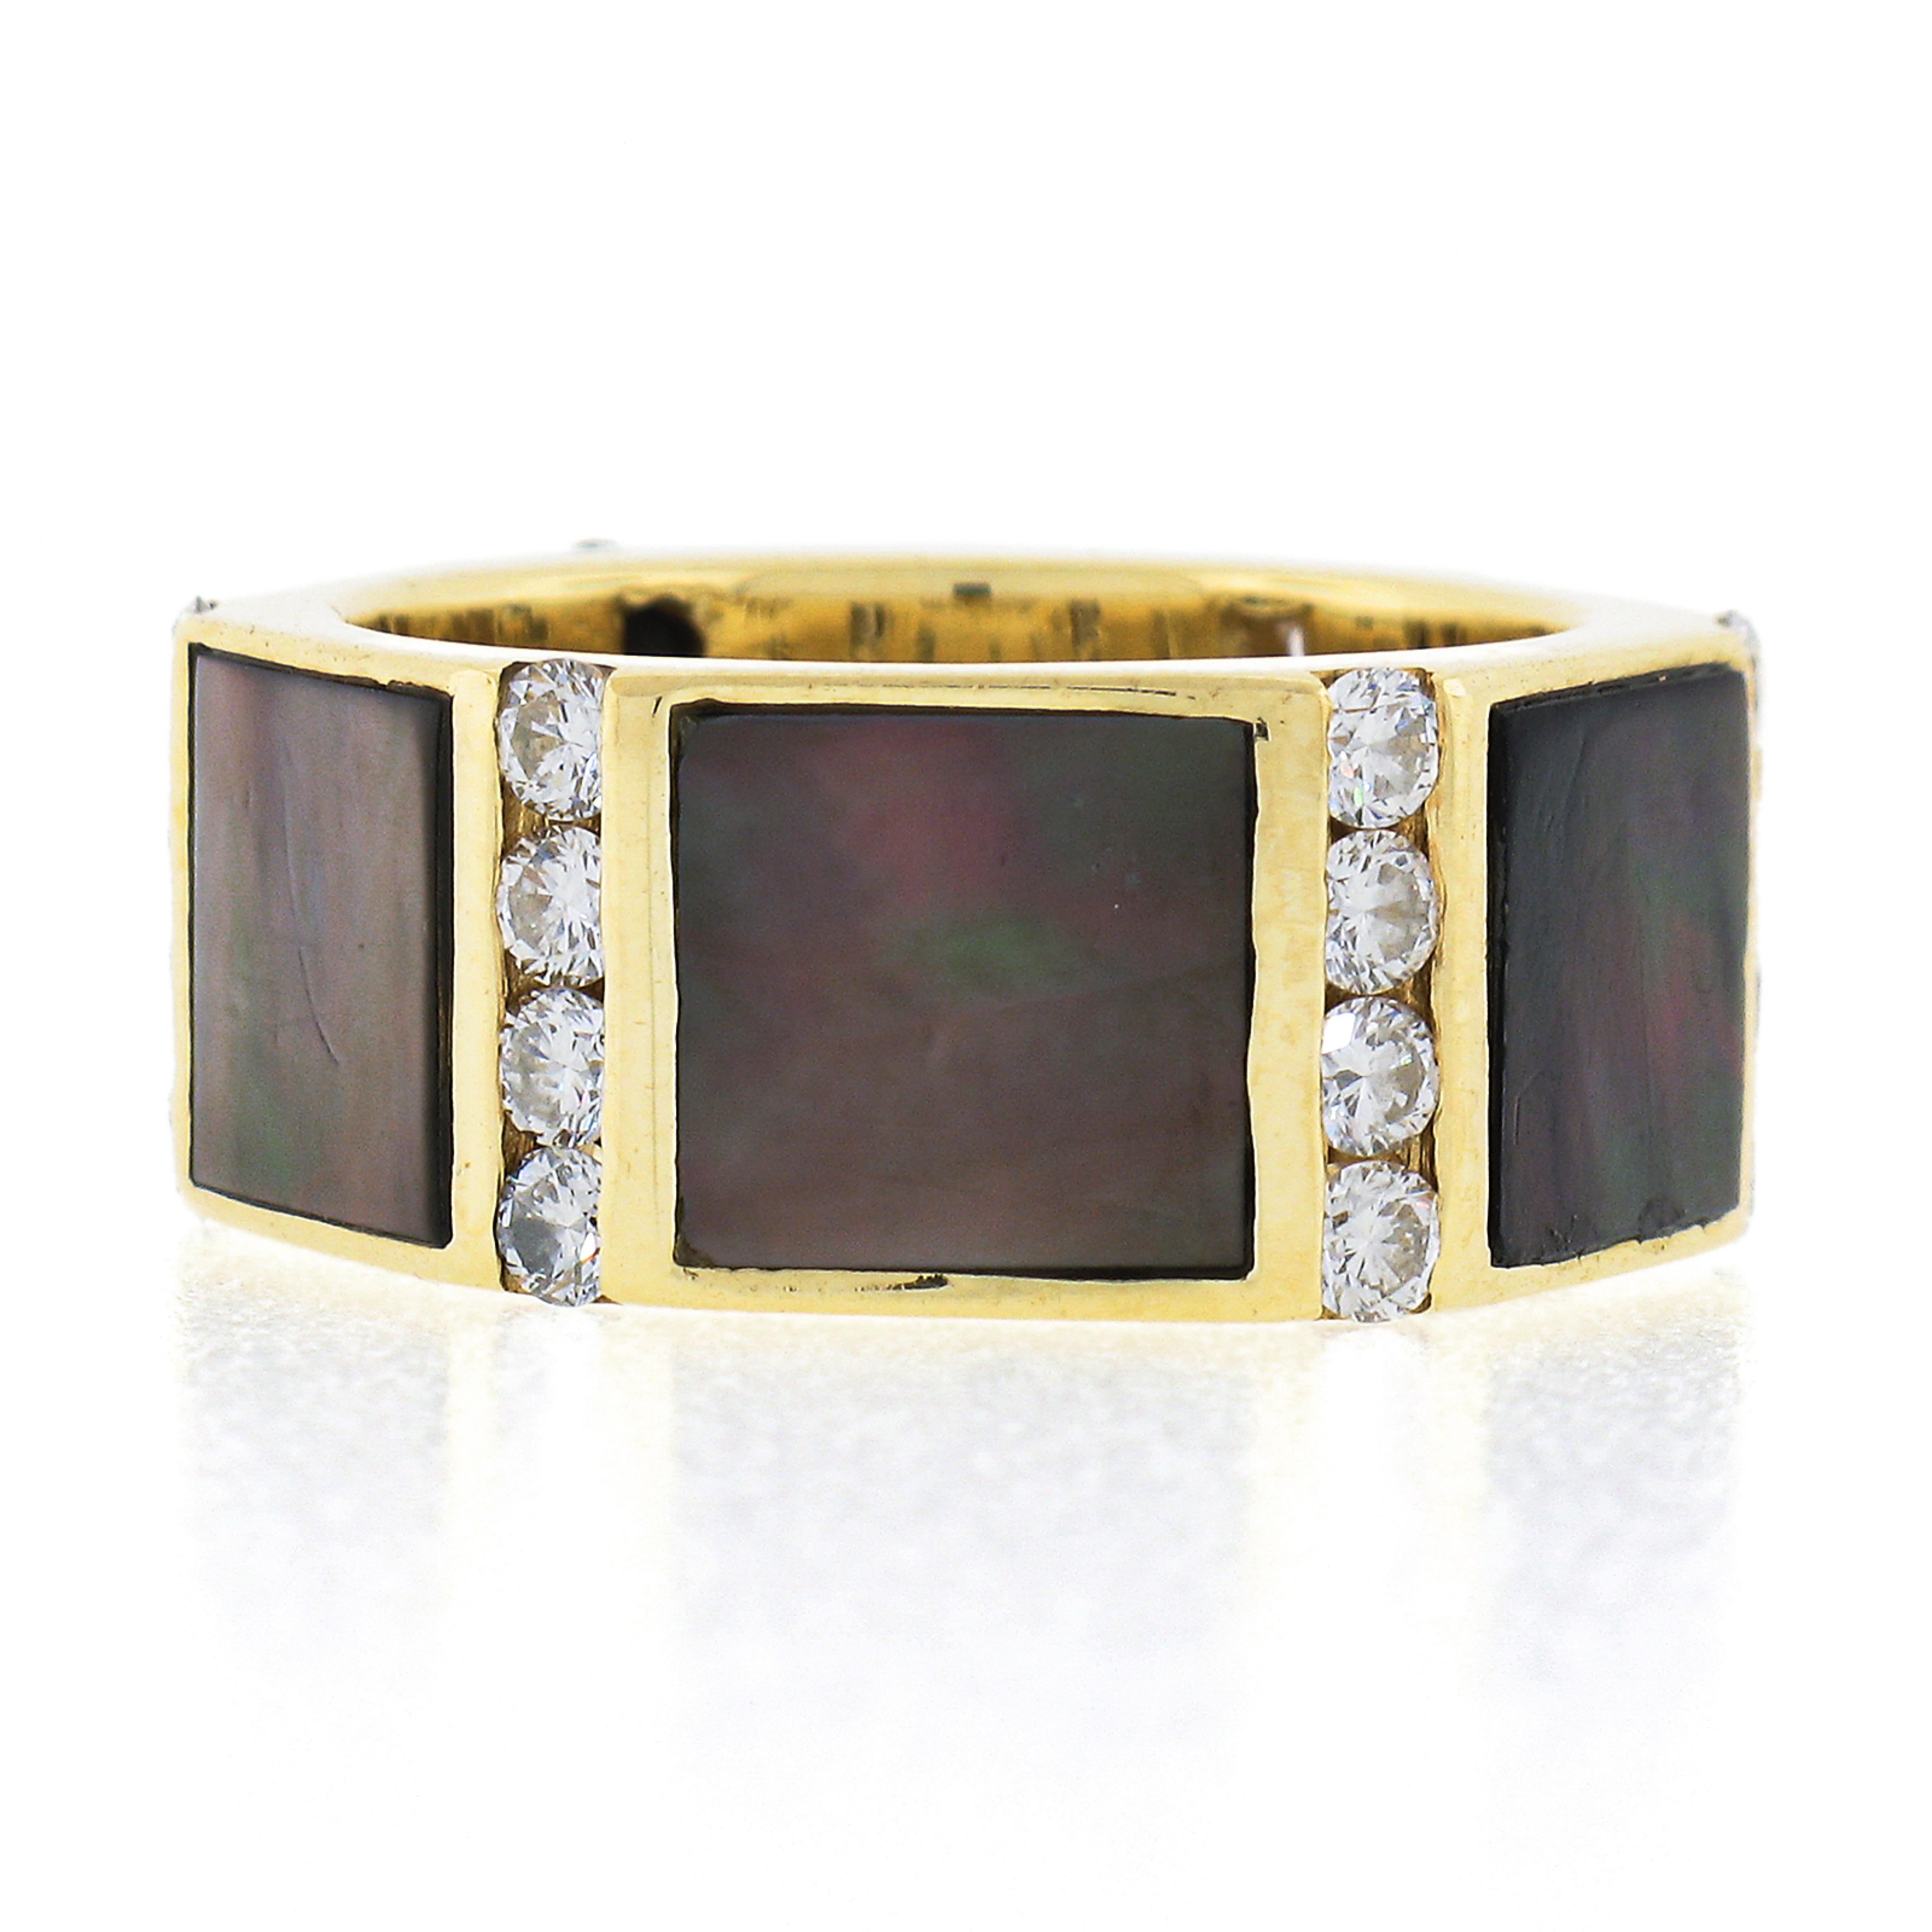 Vintage Gemlok 18K Gold Diamond Inlaid Black Mother of Pearl Eternity Band Ring